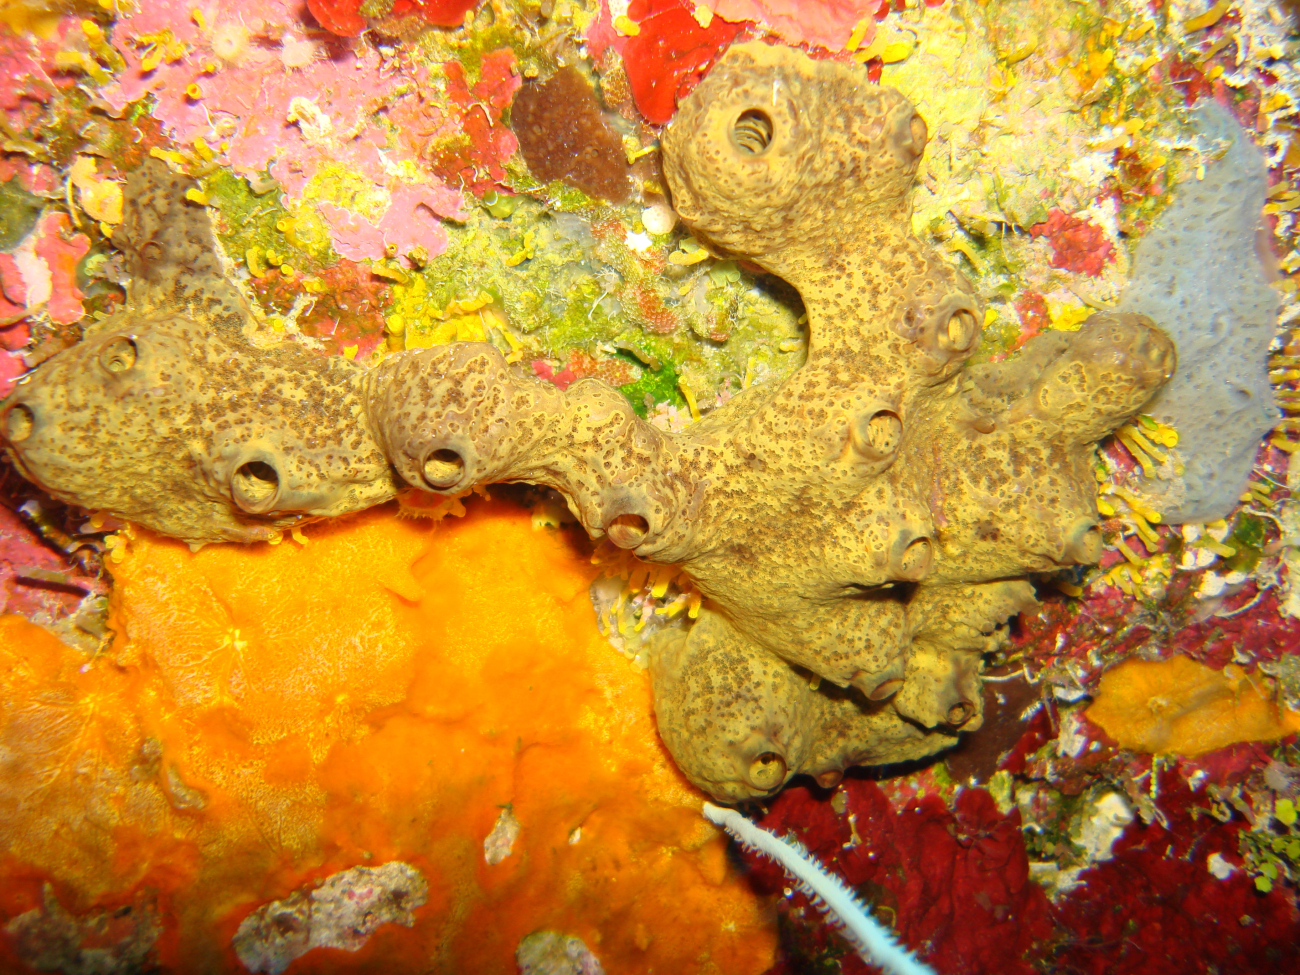 Sponge (Iotrochota atra)